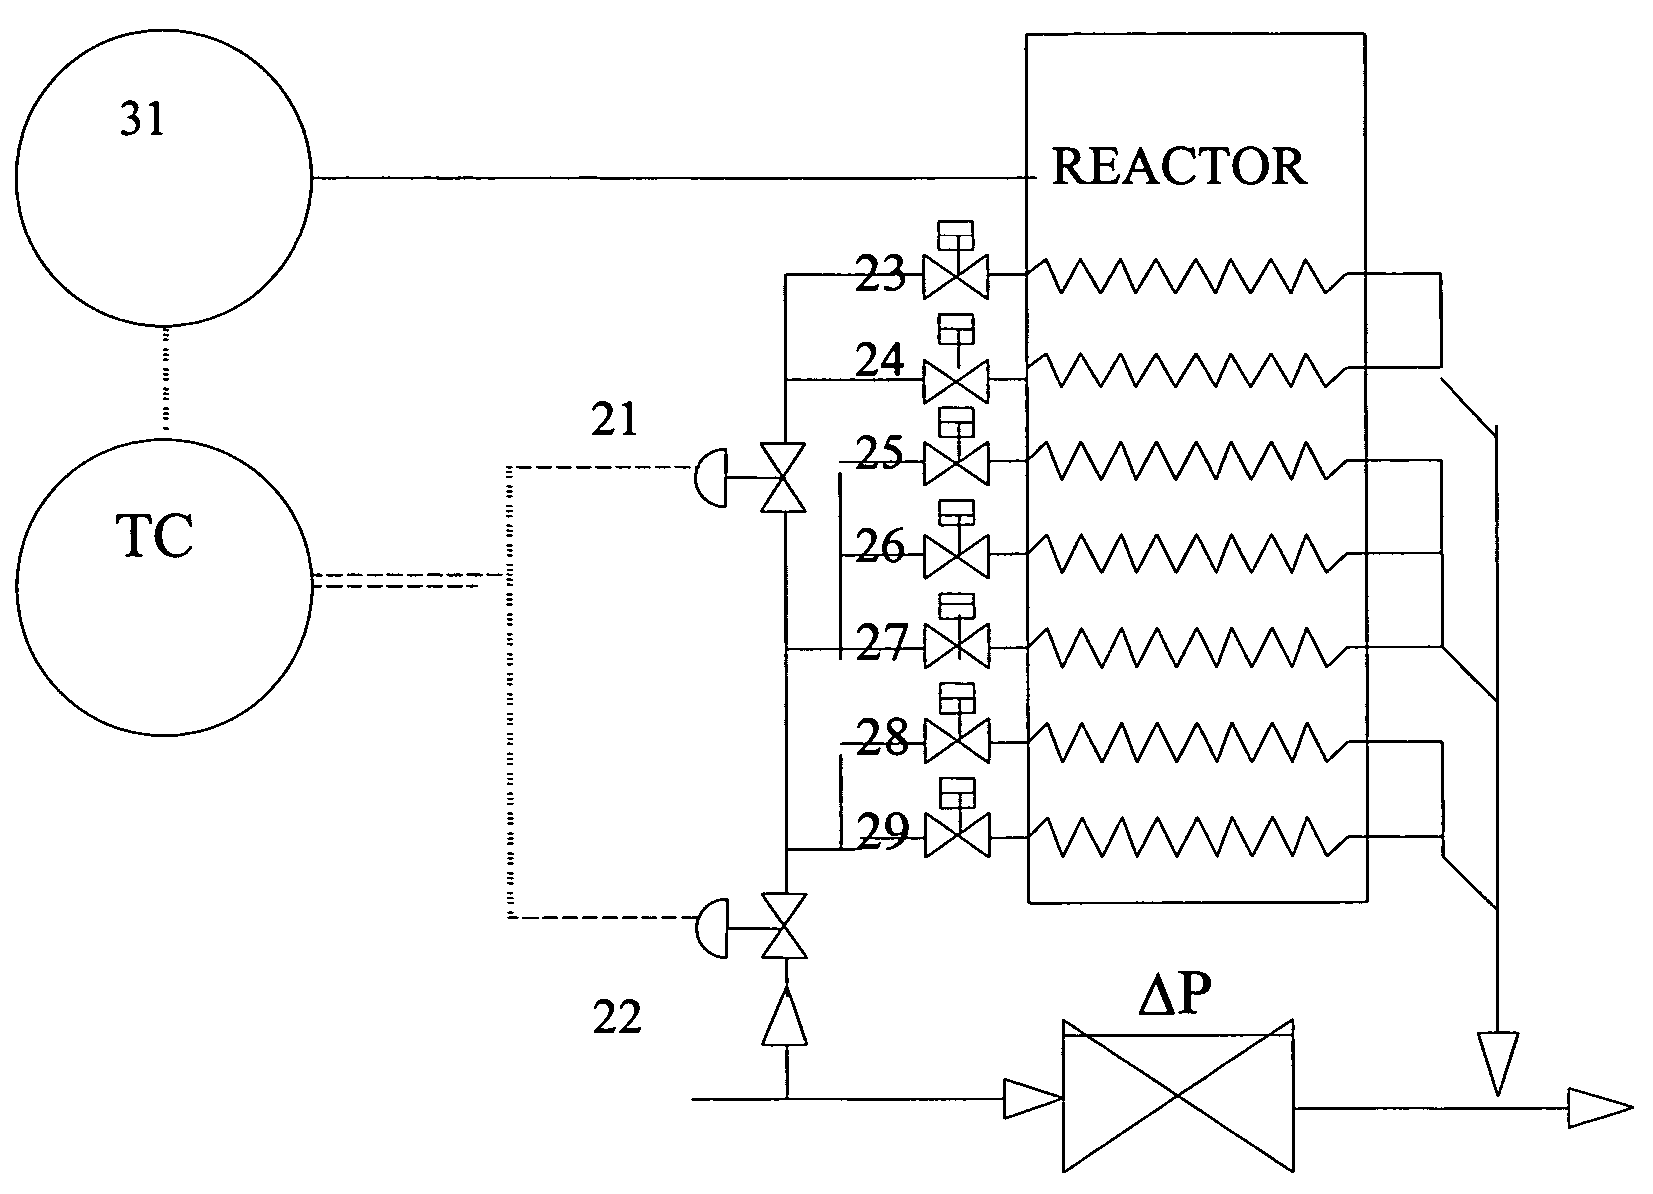 Reactor heat transfer systems